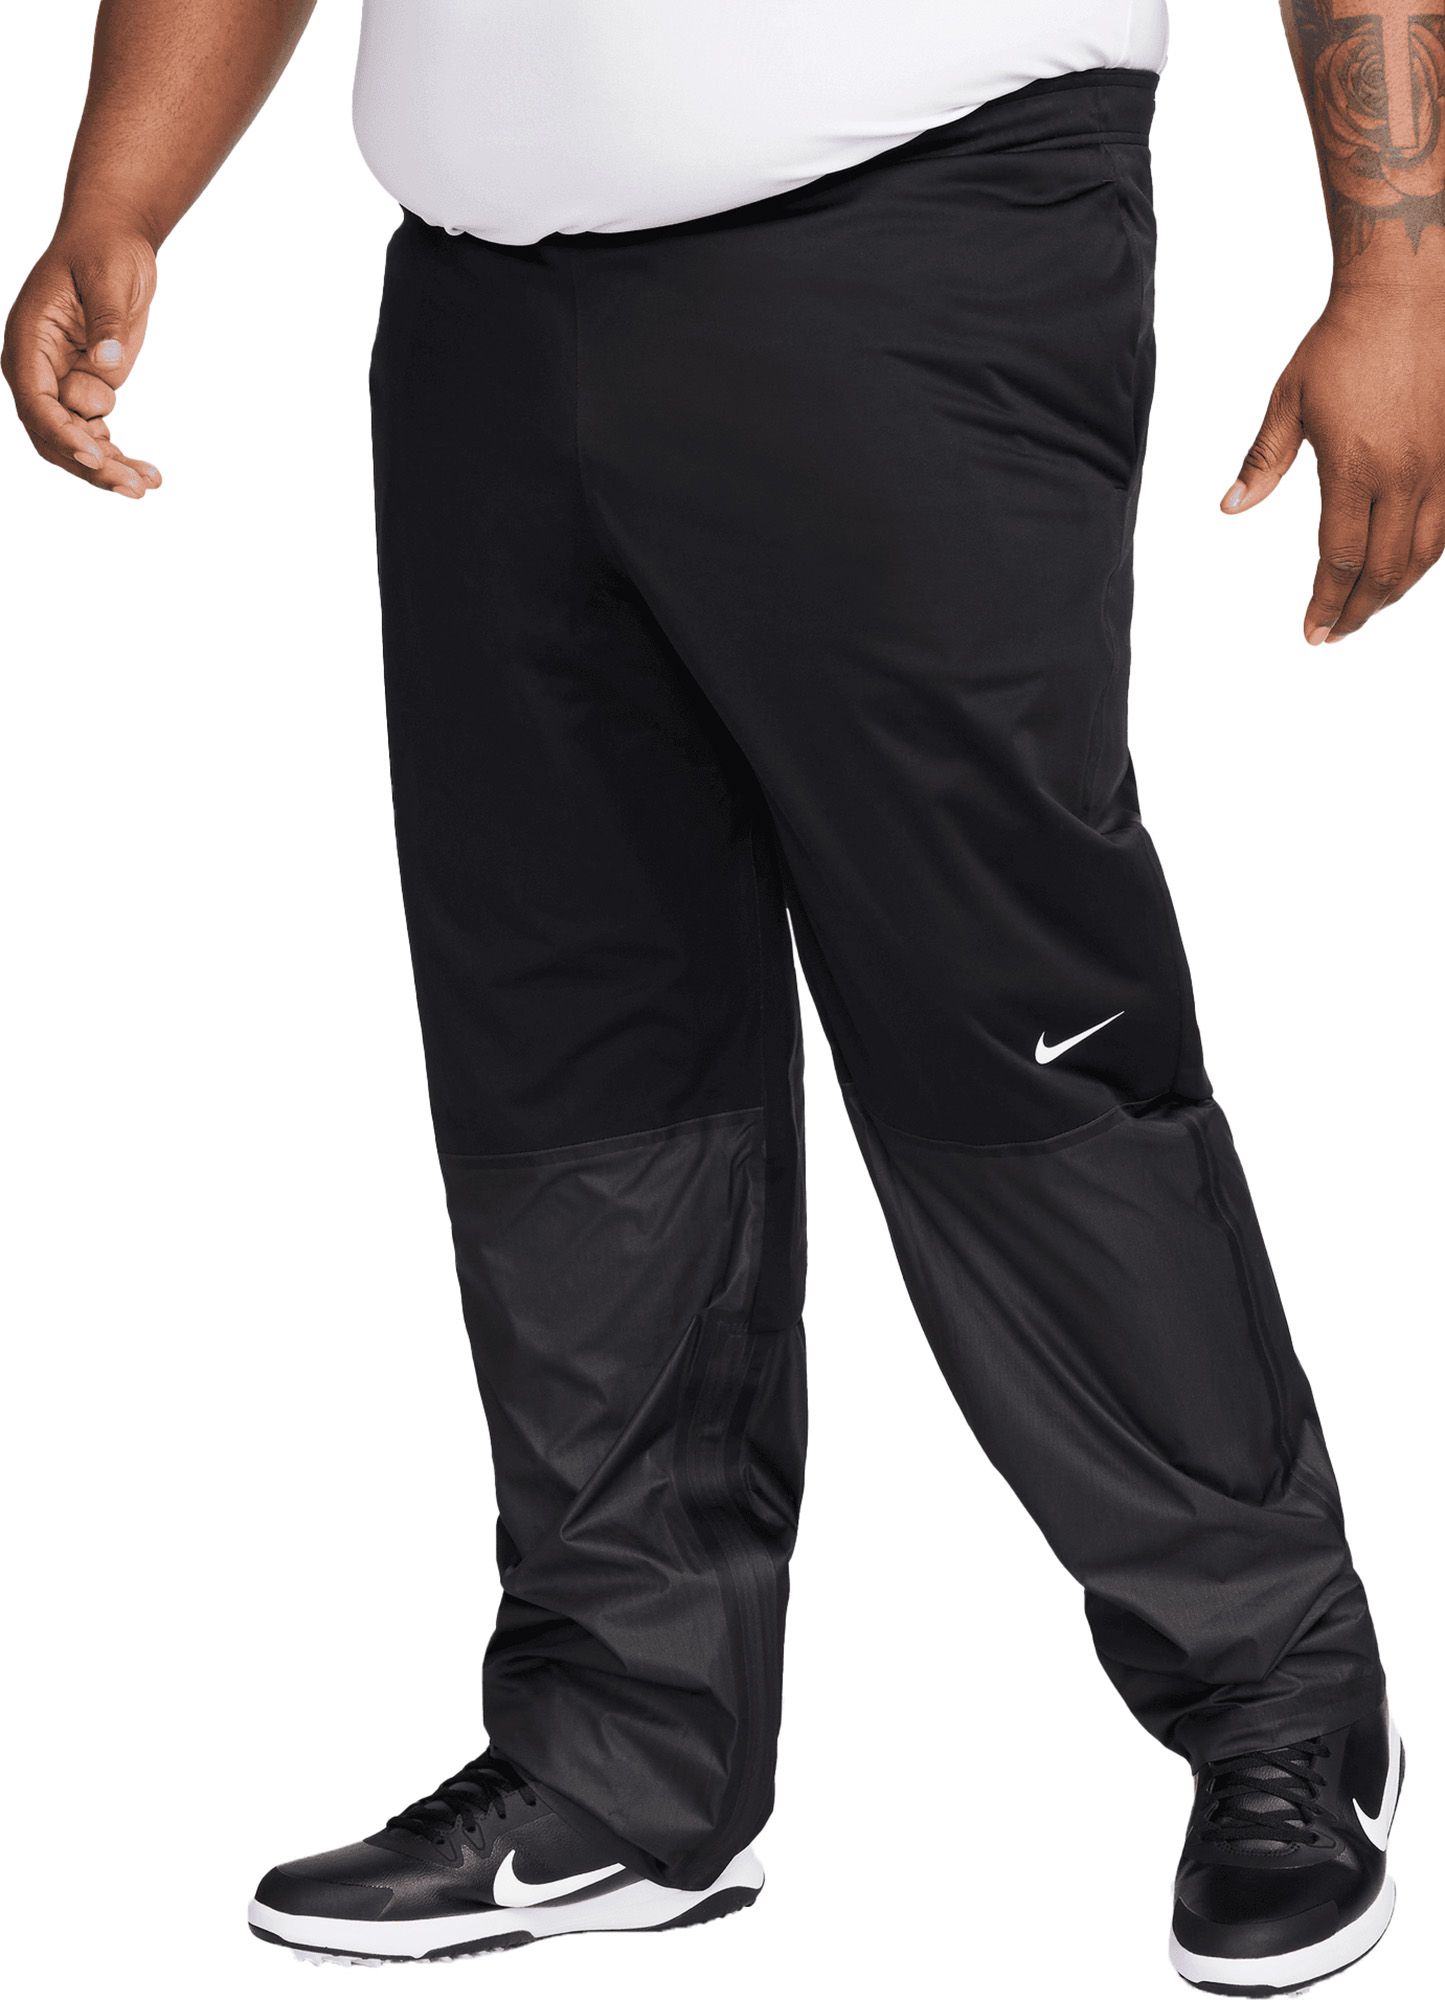 Nike Men's Storm-Fit ADV Golf Pant | The Market Place